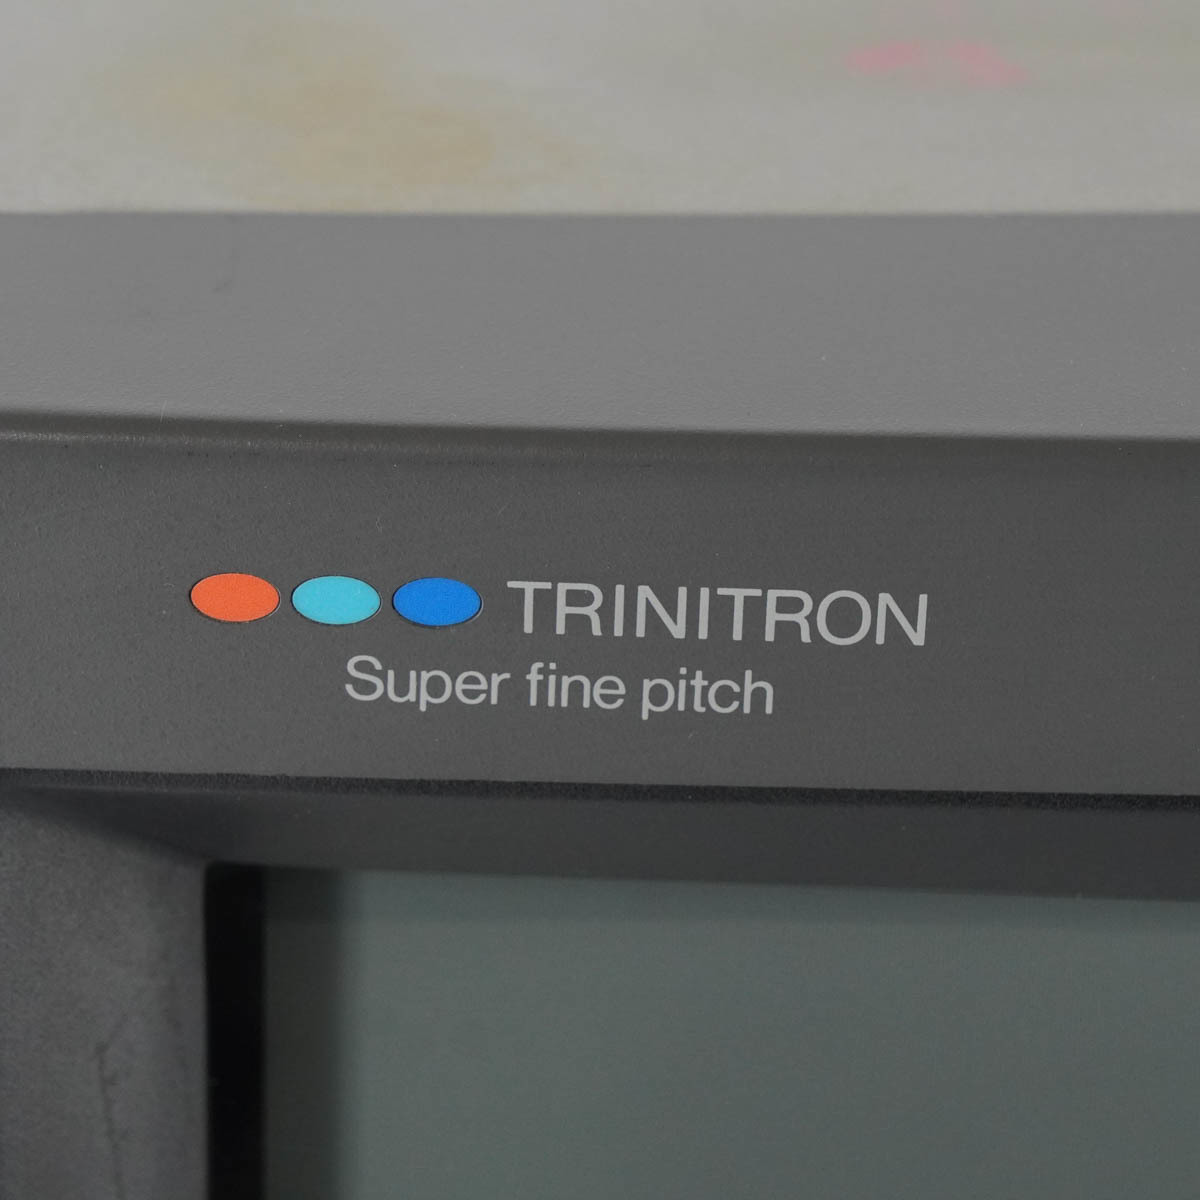 [PG] 8日保証 PVM-2044Q Trinitron SONY ソニー 20型 20インチ トリニトロン カラービデオモニター[05491-0003]_画像4